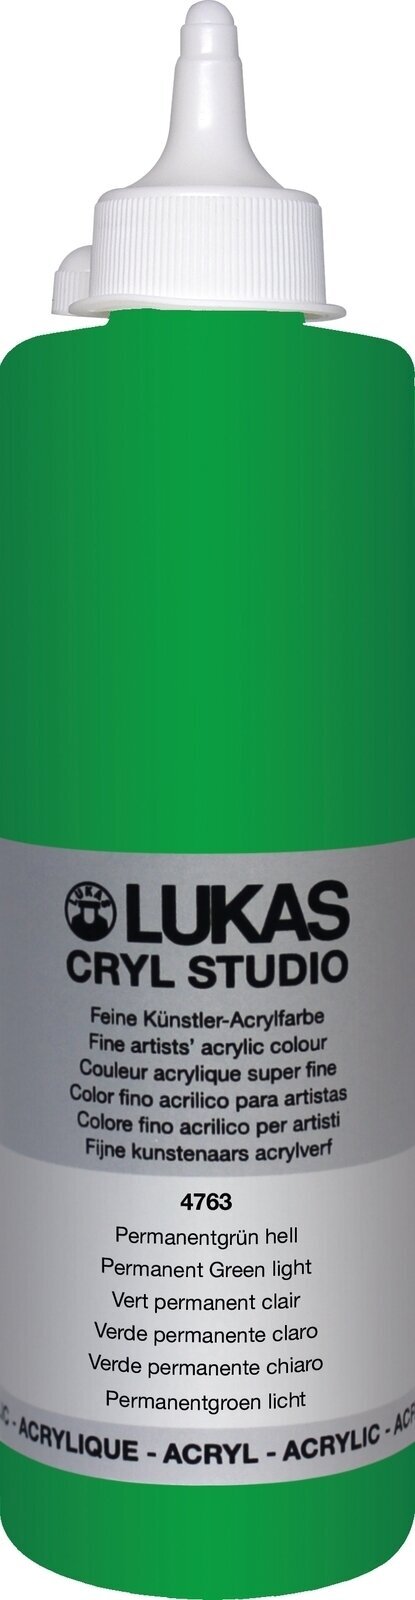 Acrylic Paint Lukas Cryl Studio Acrylic Paint Plastic Bottle Acrylic Paint Permanent Green Light 500 ml 1 pc